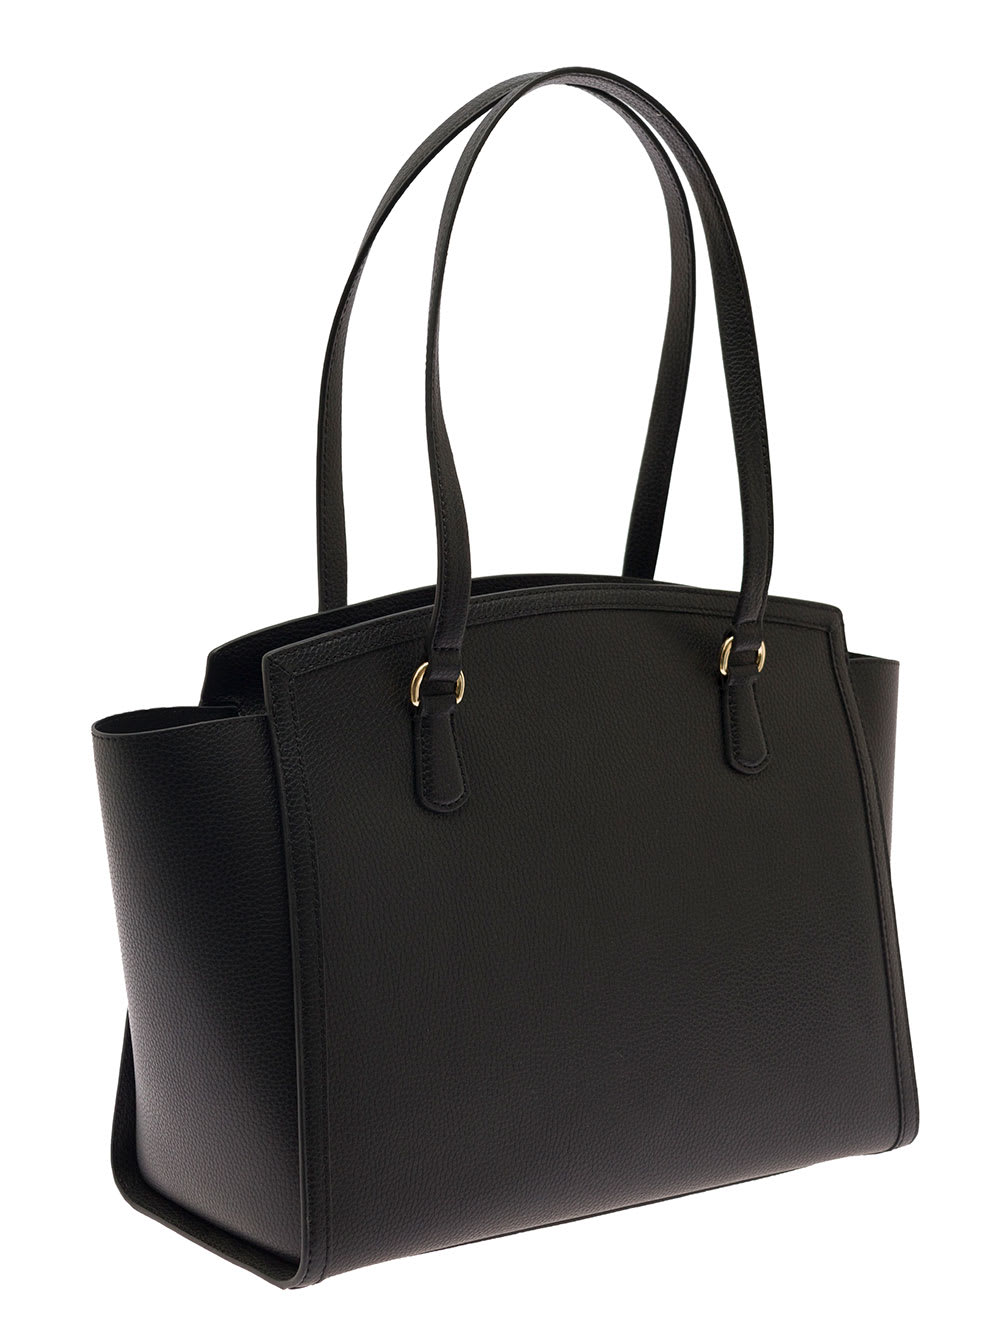 Chantal Large Black Tote Bag In Pebbled Leather Woman Michael Michael Kors